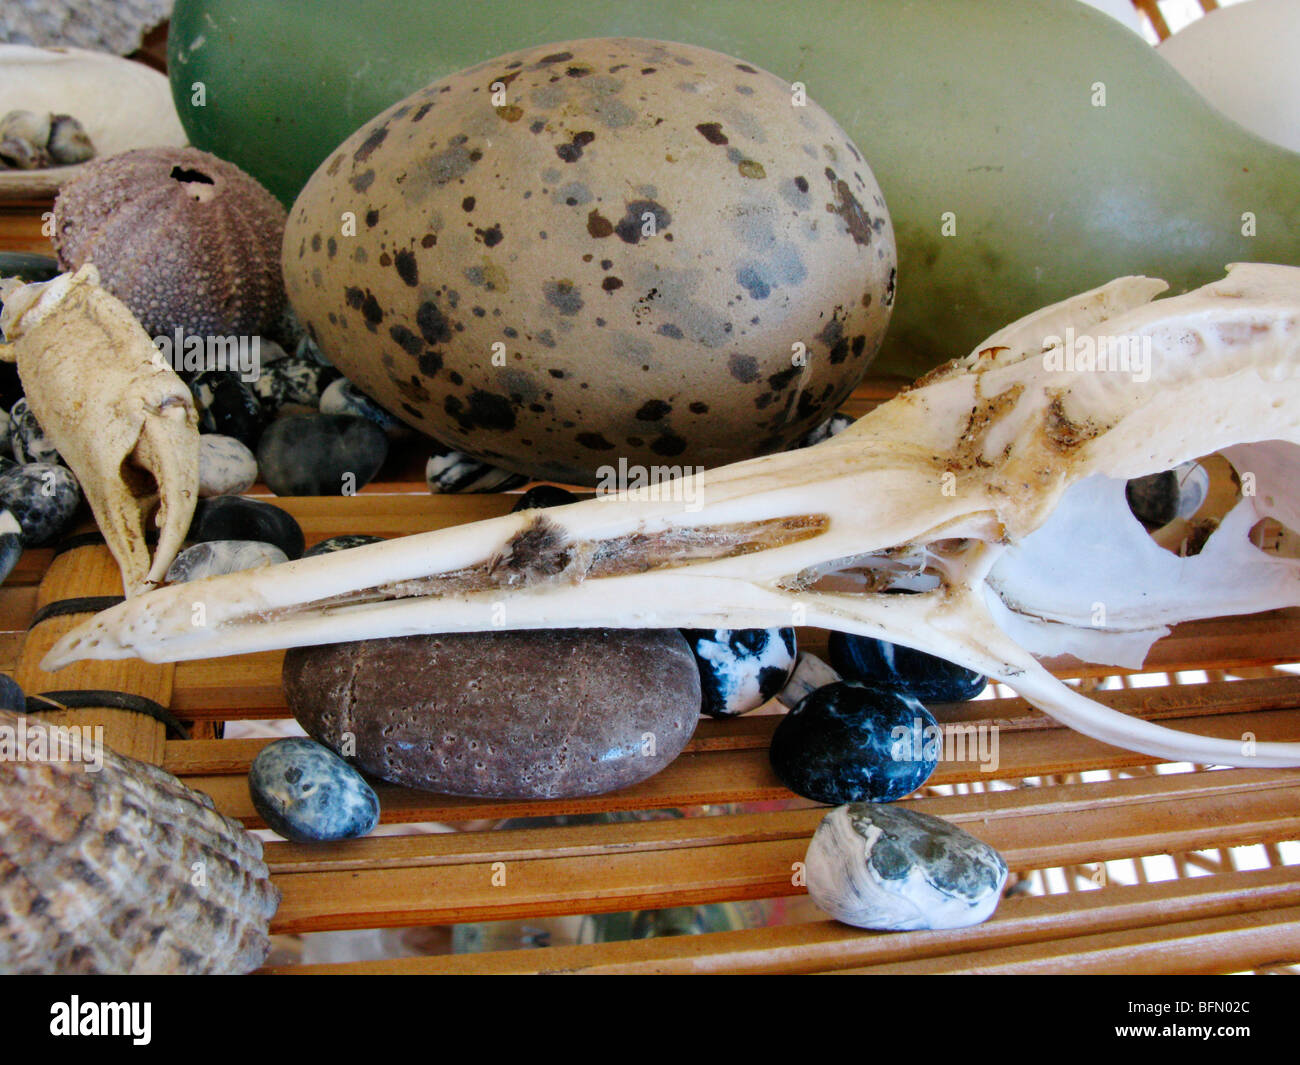 Falkland Islands. Strandline collection - bird skull, egg; crab claw, sea urchin, pebbles and shells. Stock Photo